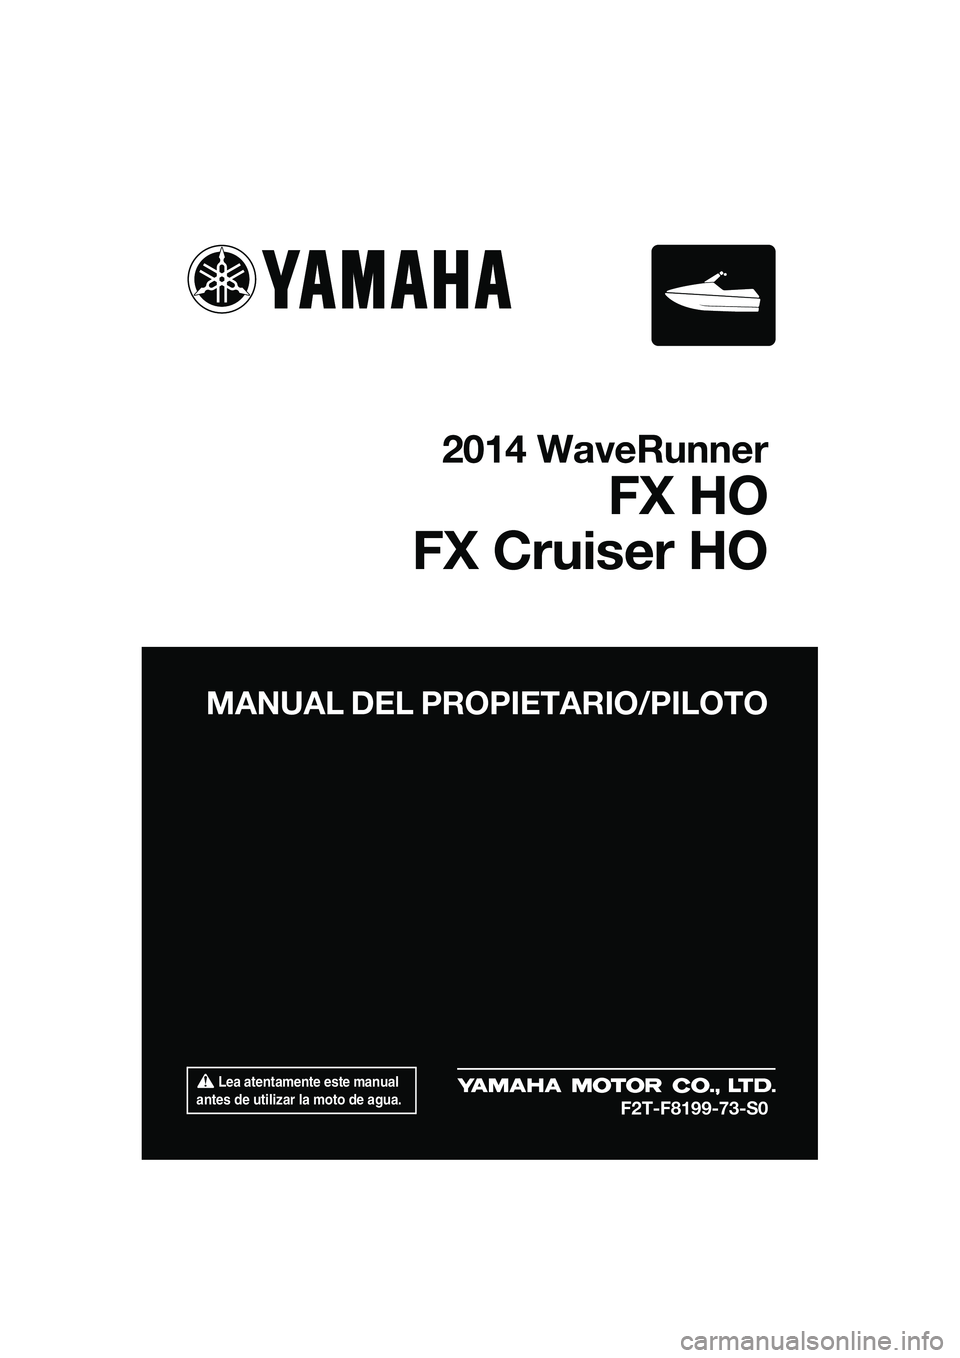 YAMAHA FX HO 2014  Manuale de Empleo (in Spanish) 